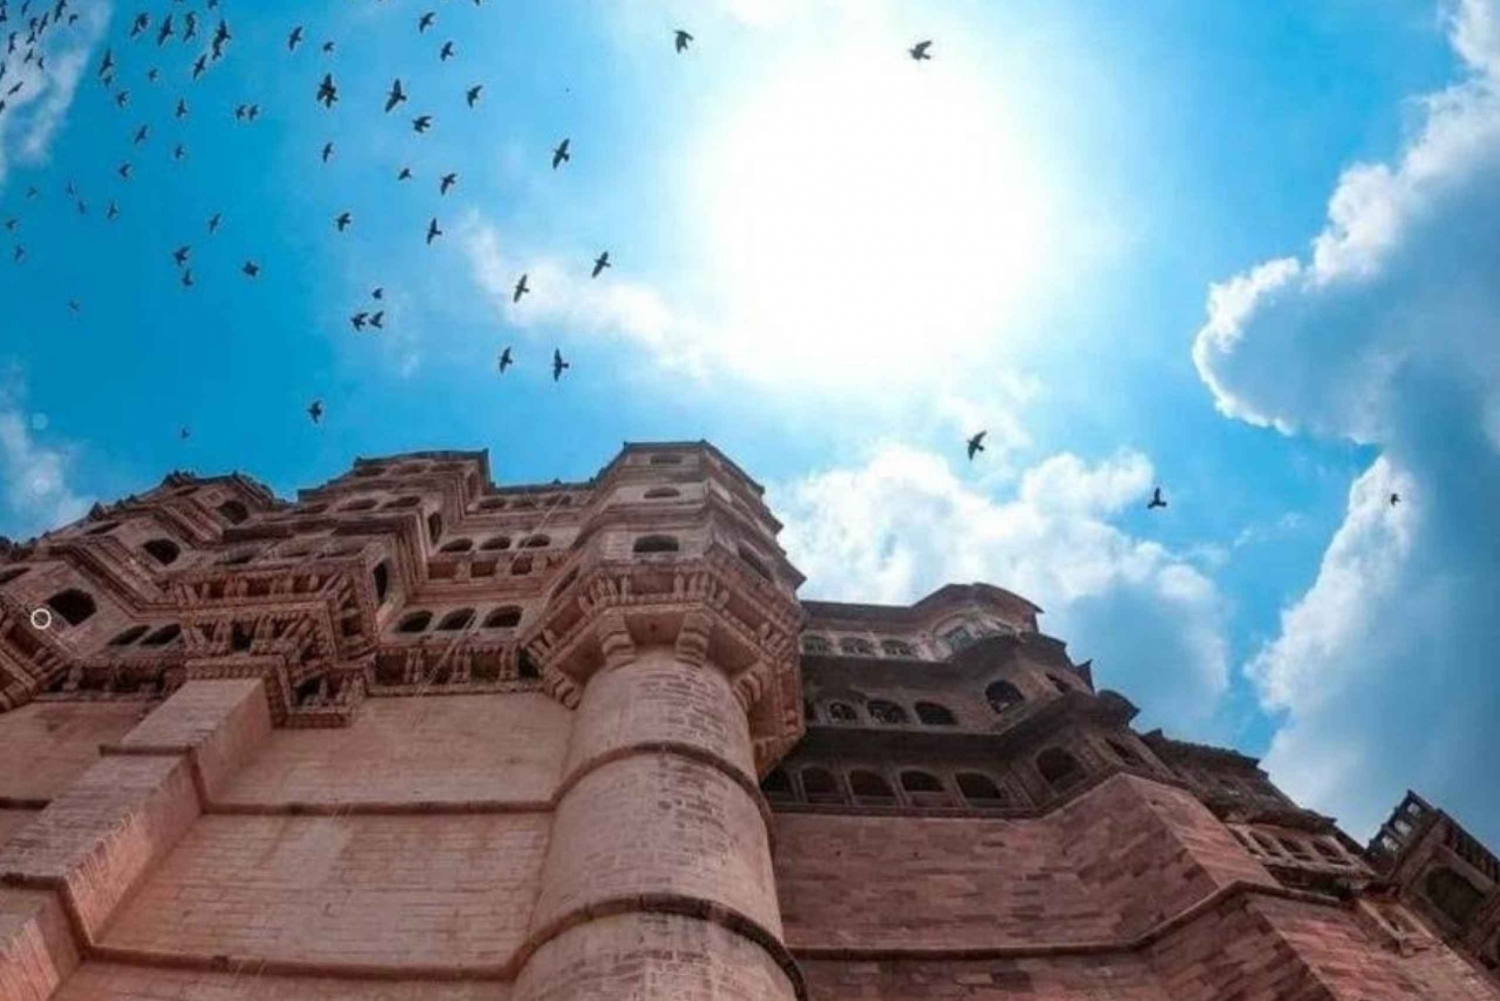 Marvel-at-the-Massive-Mehrangarh-Fort-in-Jodhpur